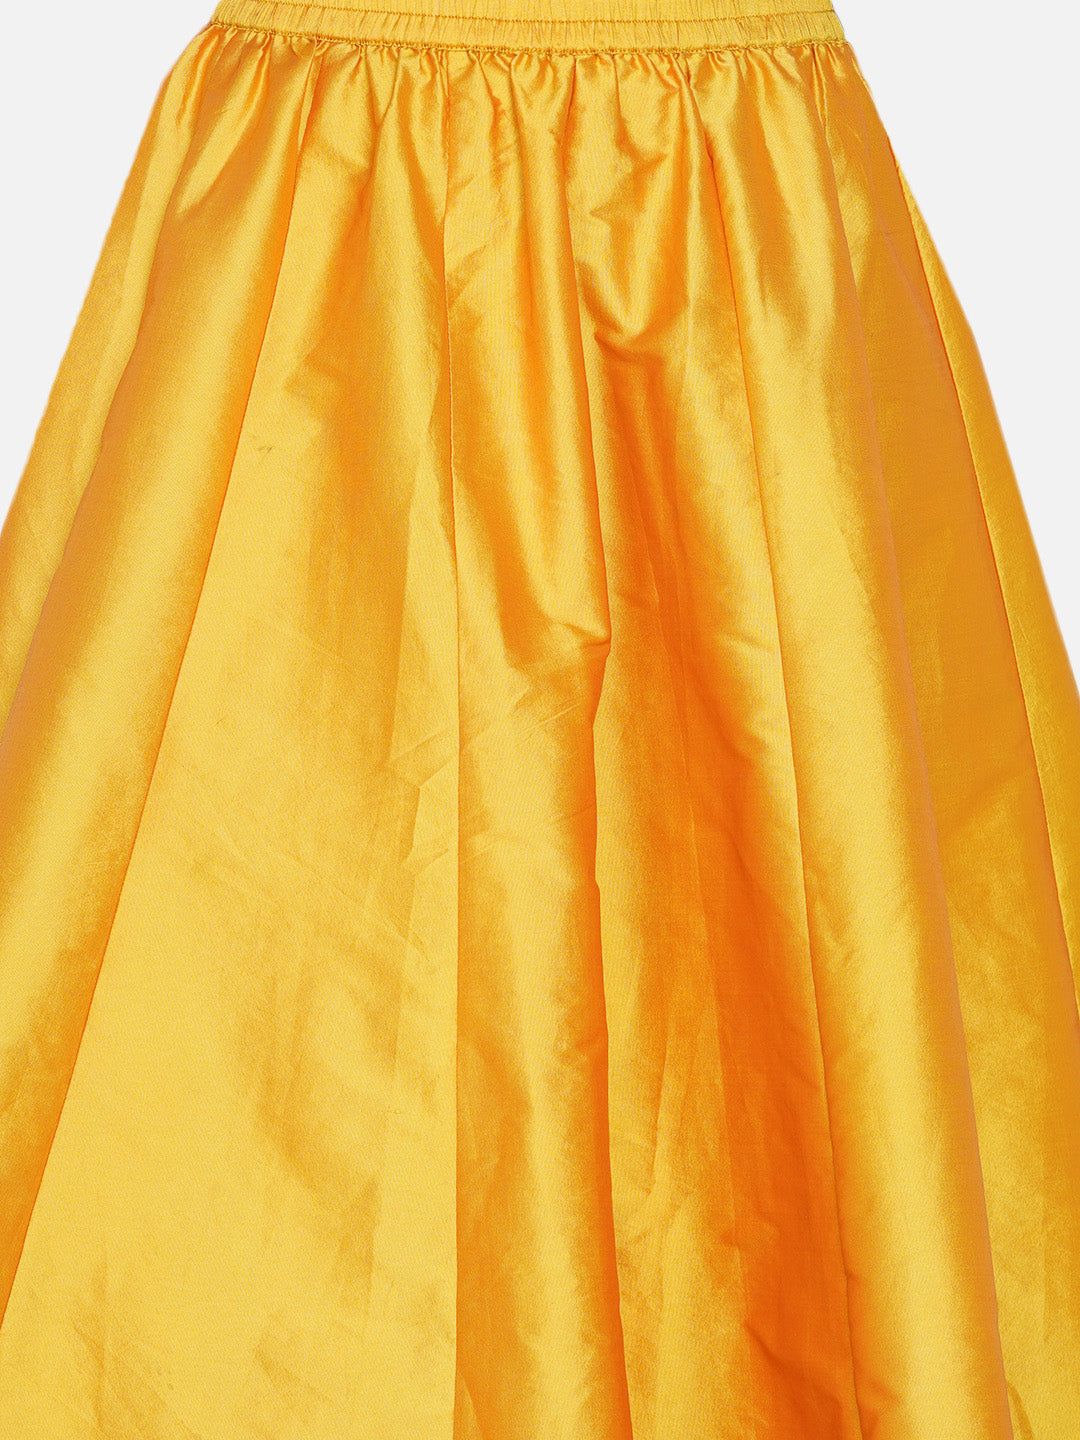 Girls Peach & Yellow Embellished Ready To Wear Lehenga Choli - Bitiya By Bhama